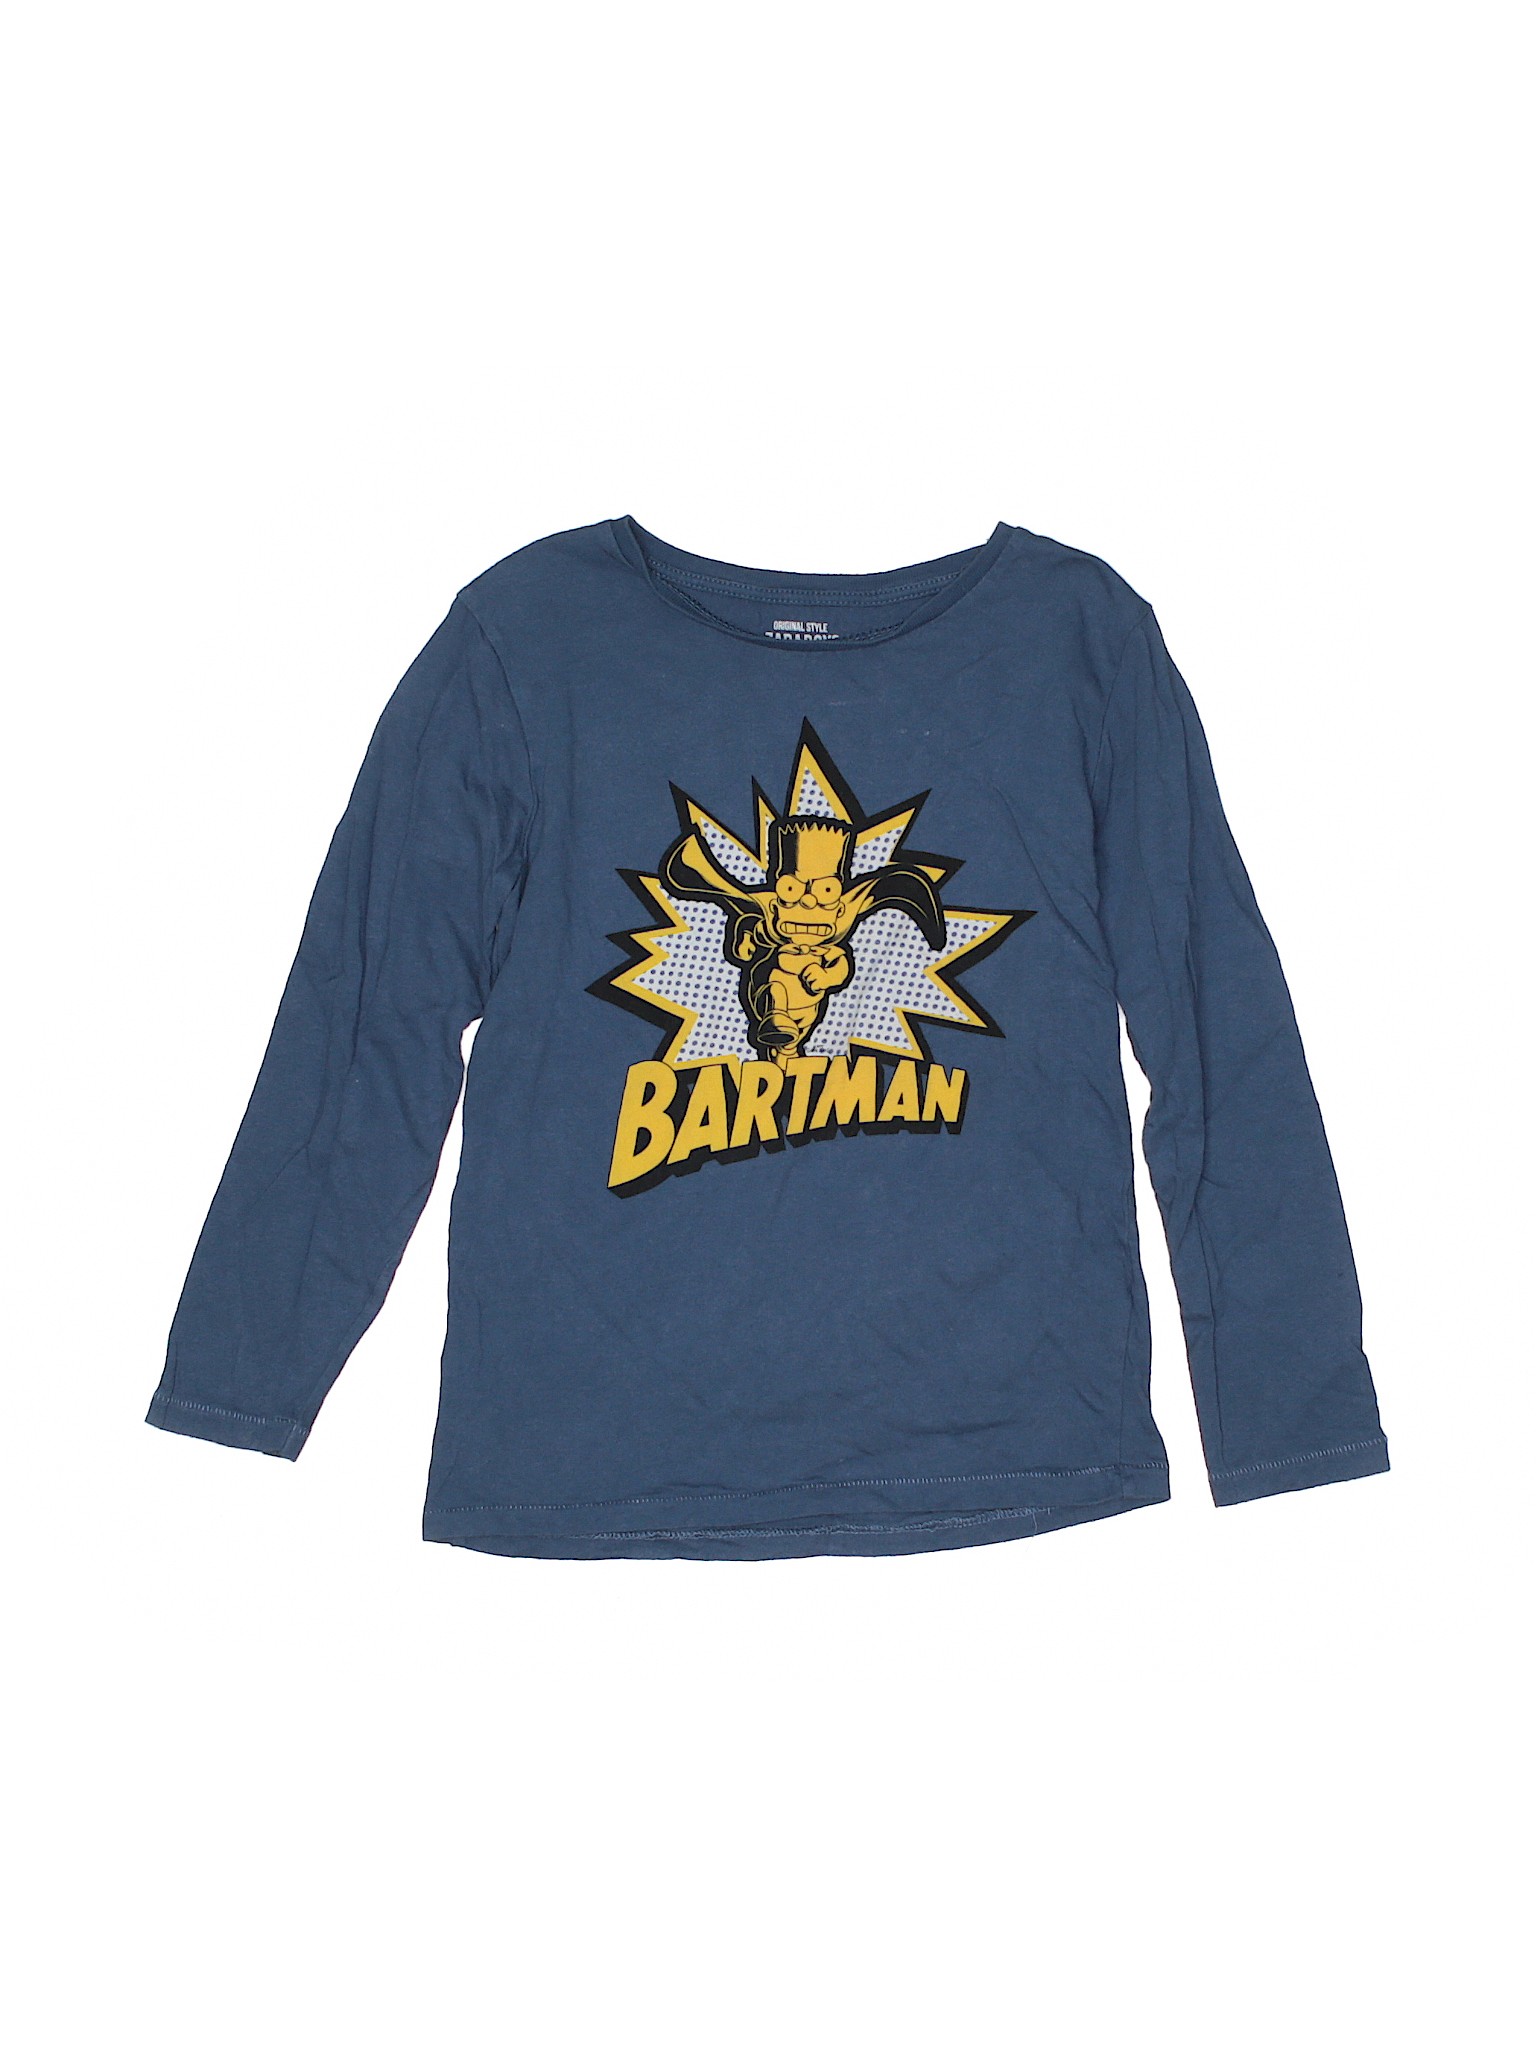  Zara  Boys Blue Long Sleeve T  Shirt  4 eBay